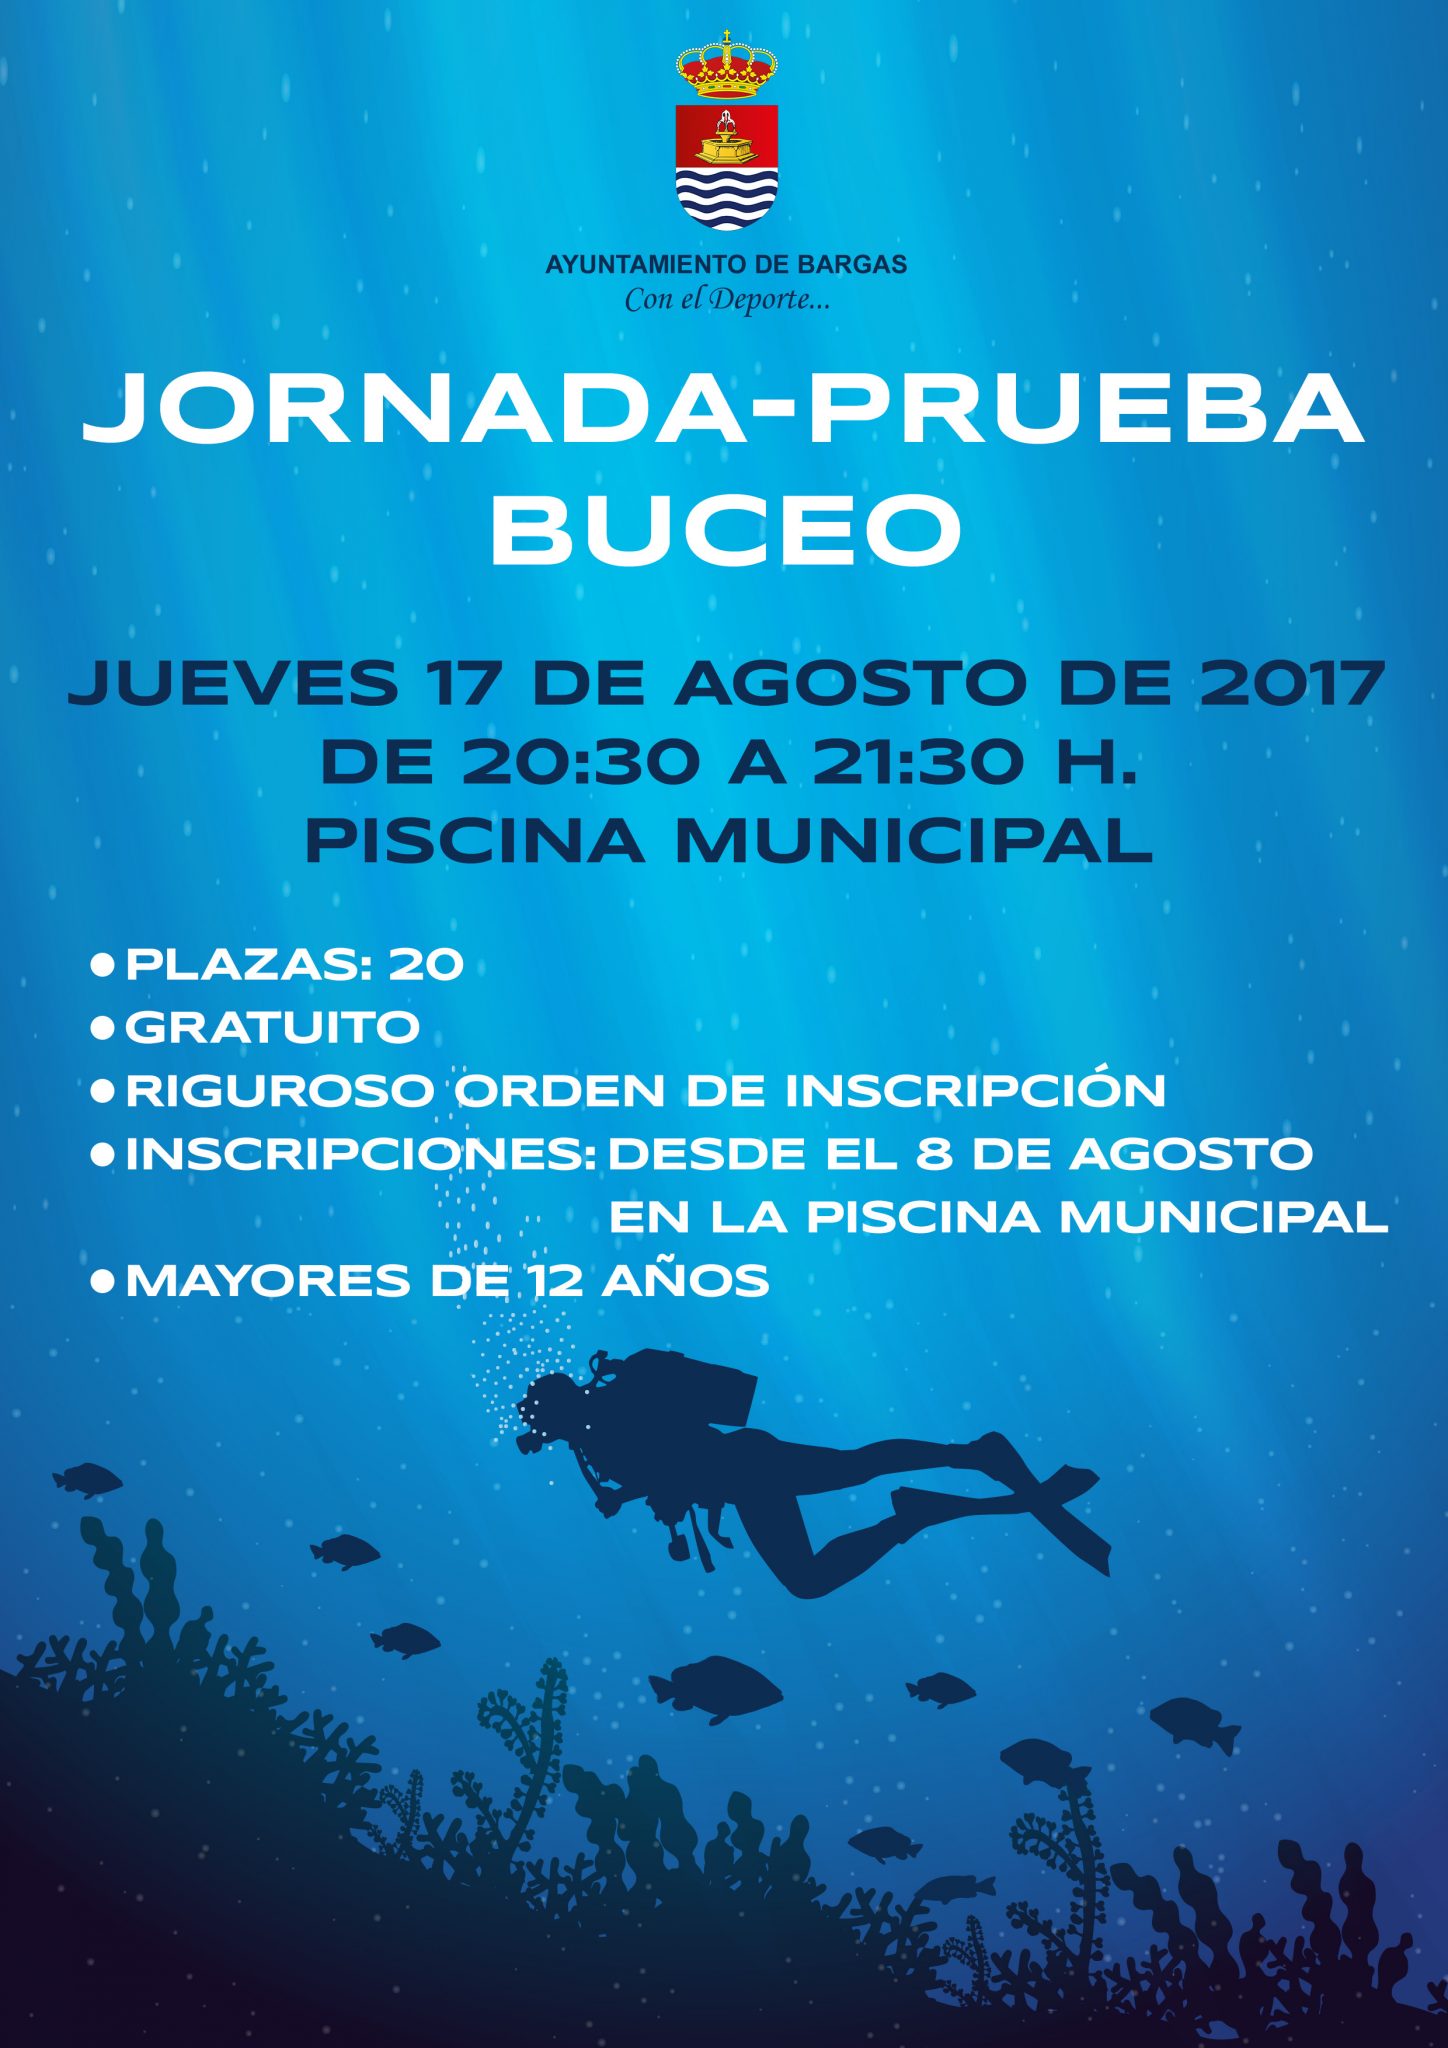 Jornada-Prueba de Buceo